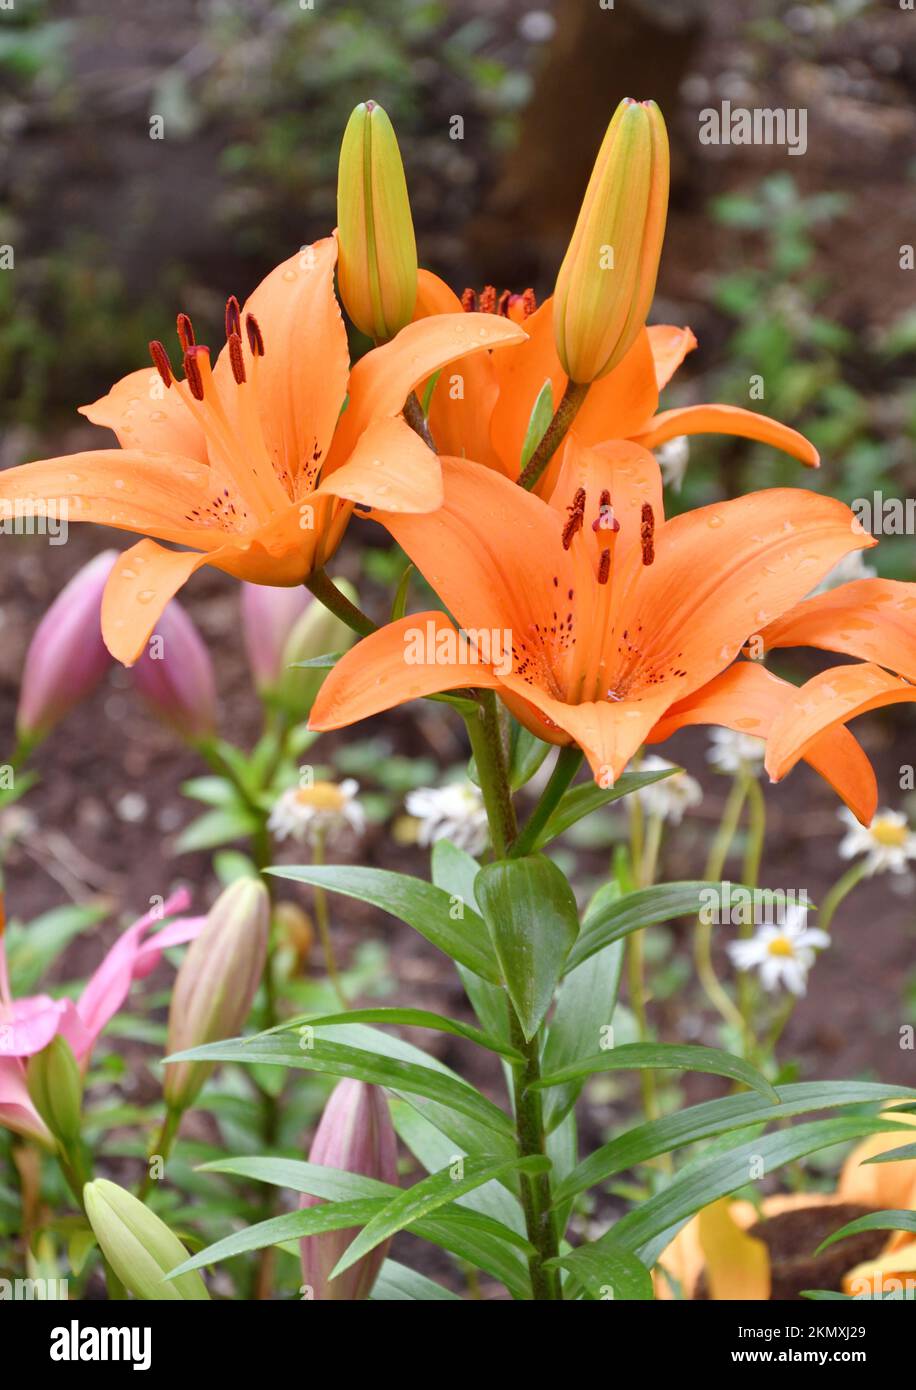 Flower Lily Asian hybrid Tresor orange color after rain in summer garden Stock Photo